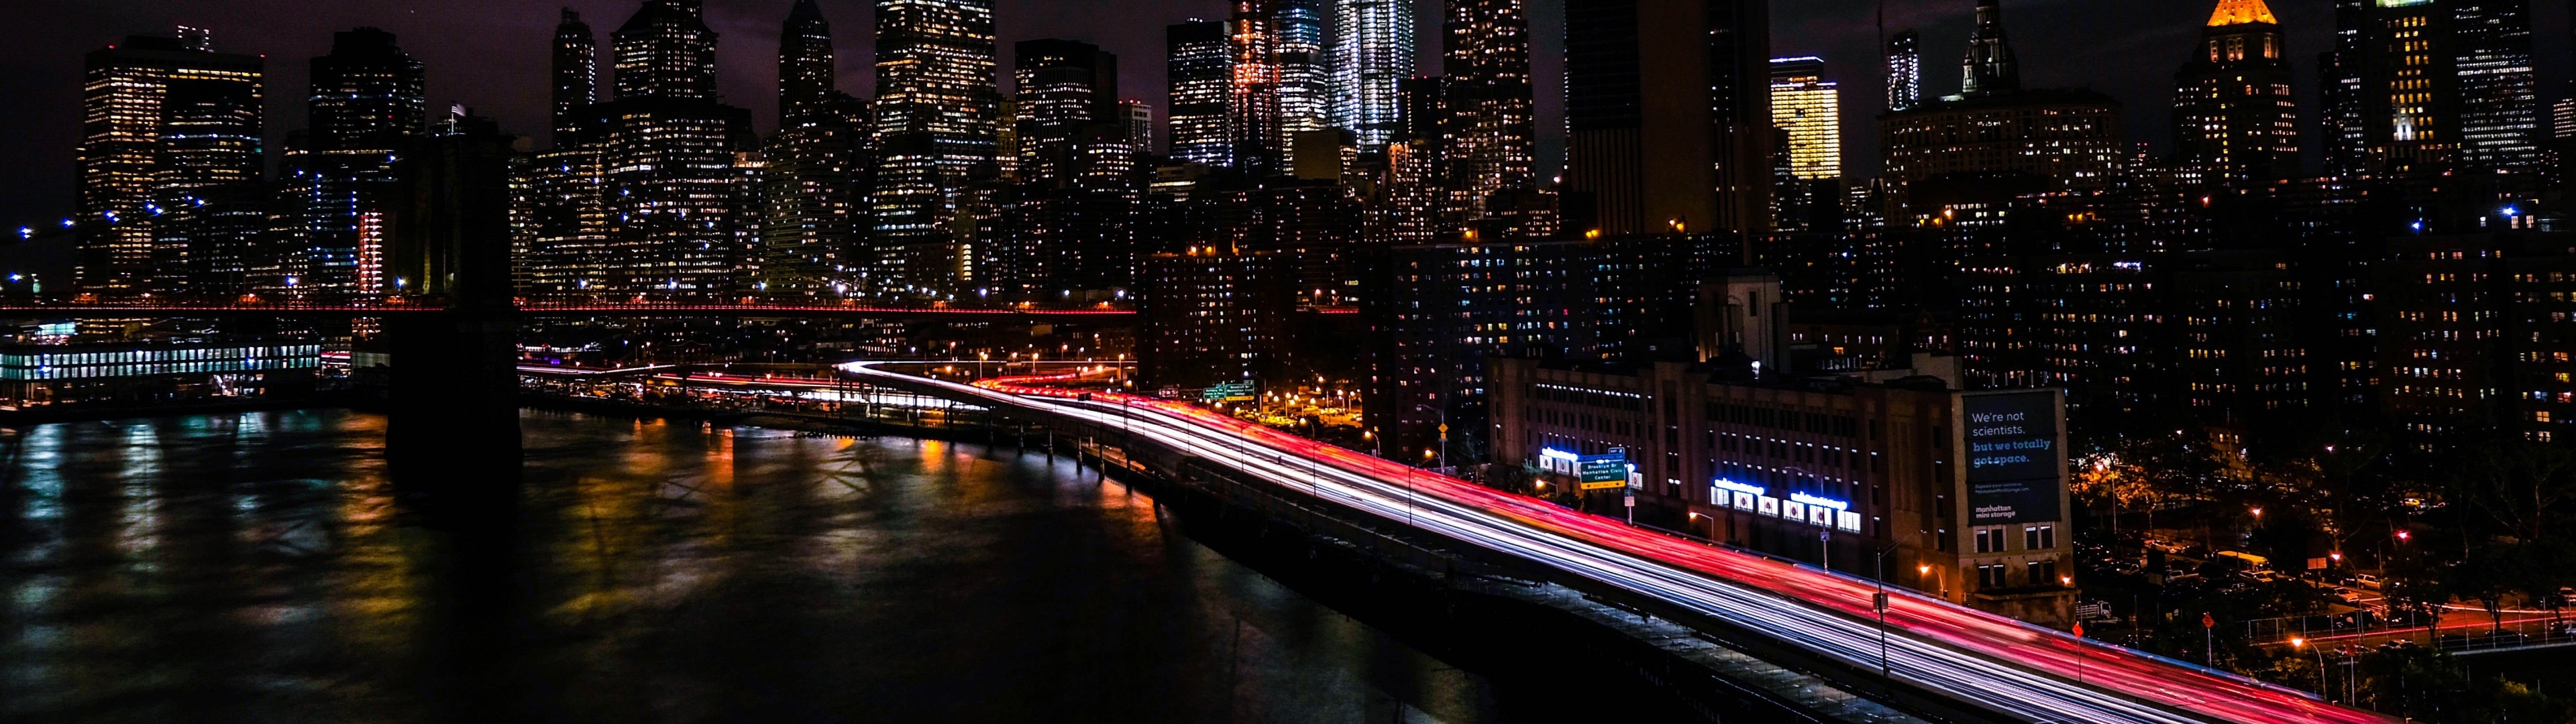 New York at Night, 4K night cityscape, City lights, Timelapse, 3840x1080 Dual Screen Desktop